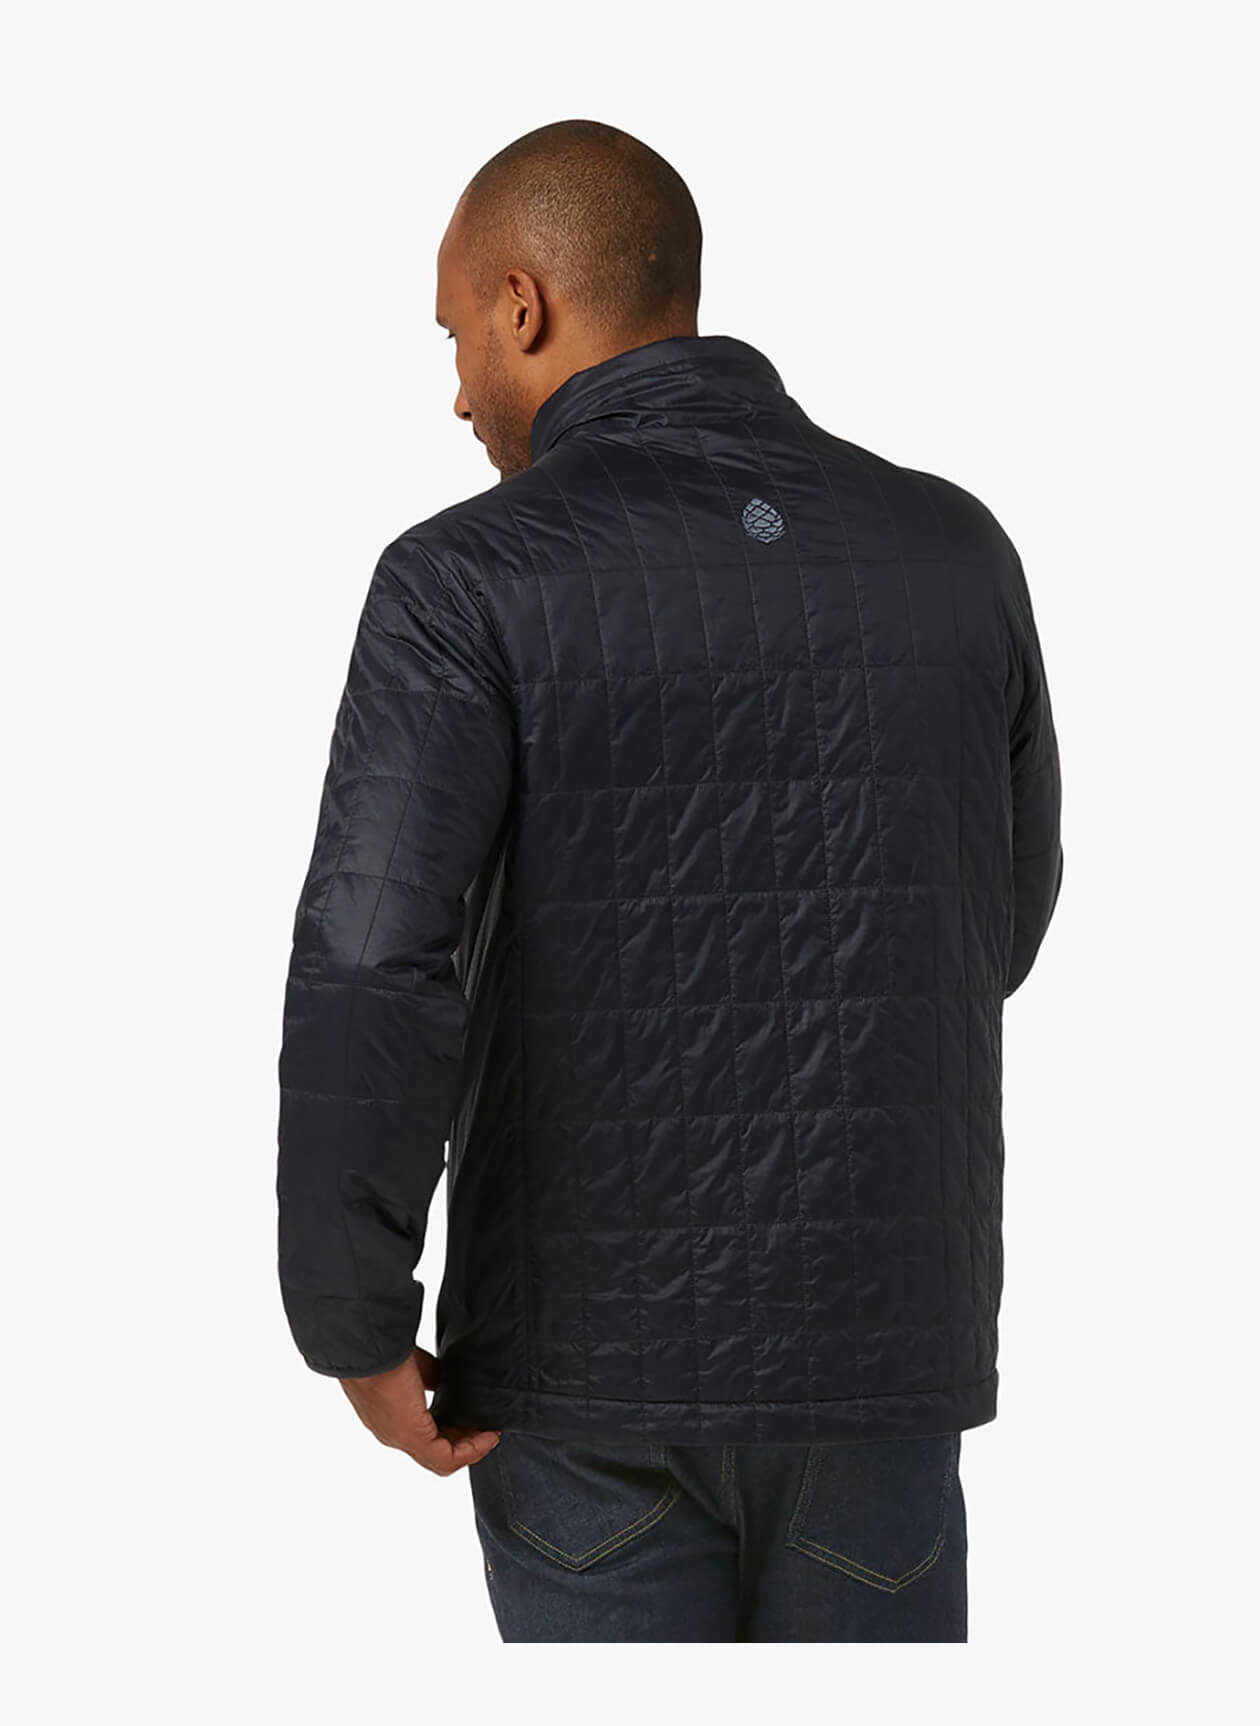 STIO Men's Azura Jacket, Boundary Black